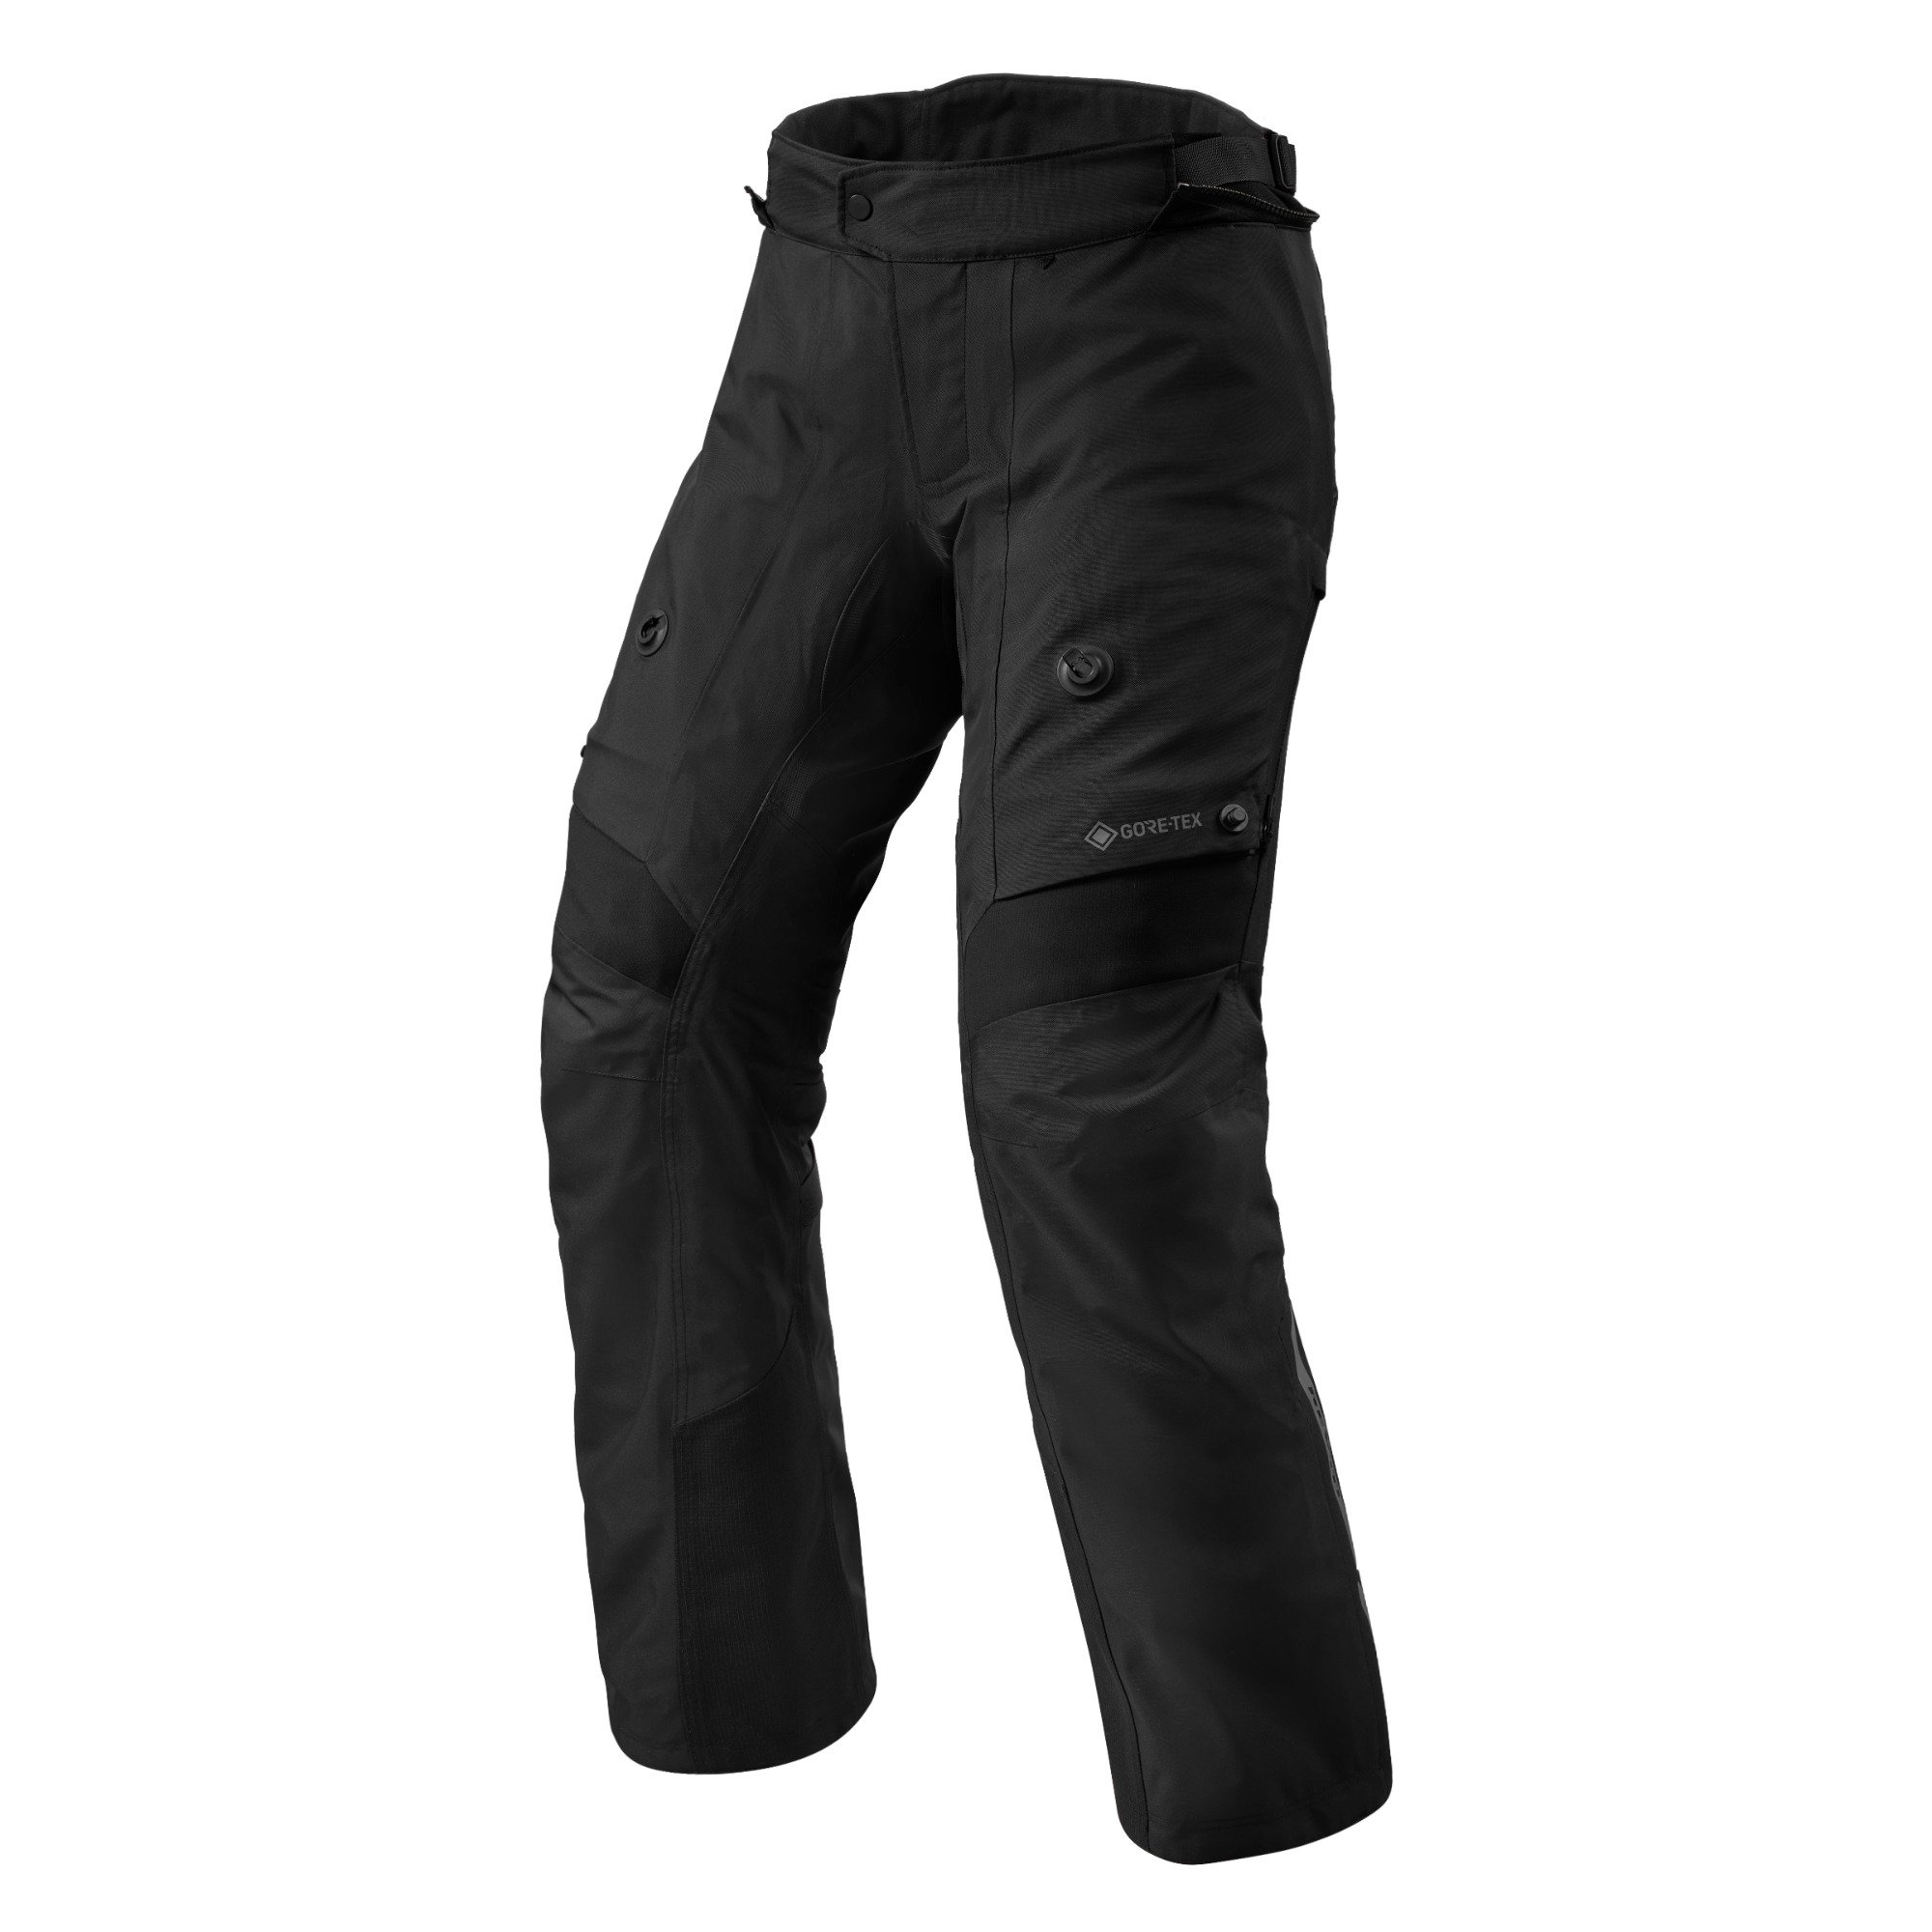 Image of REV'IT! Pants Poseidon 3 GTX Black Short Motorcycle Pants Talla L